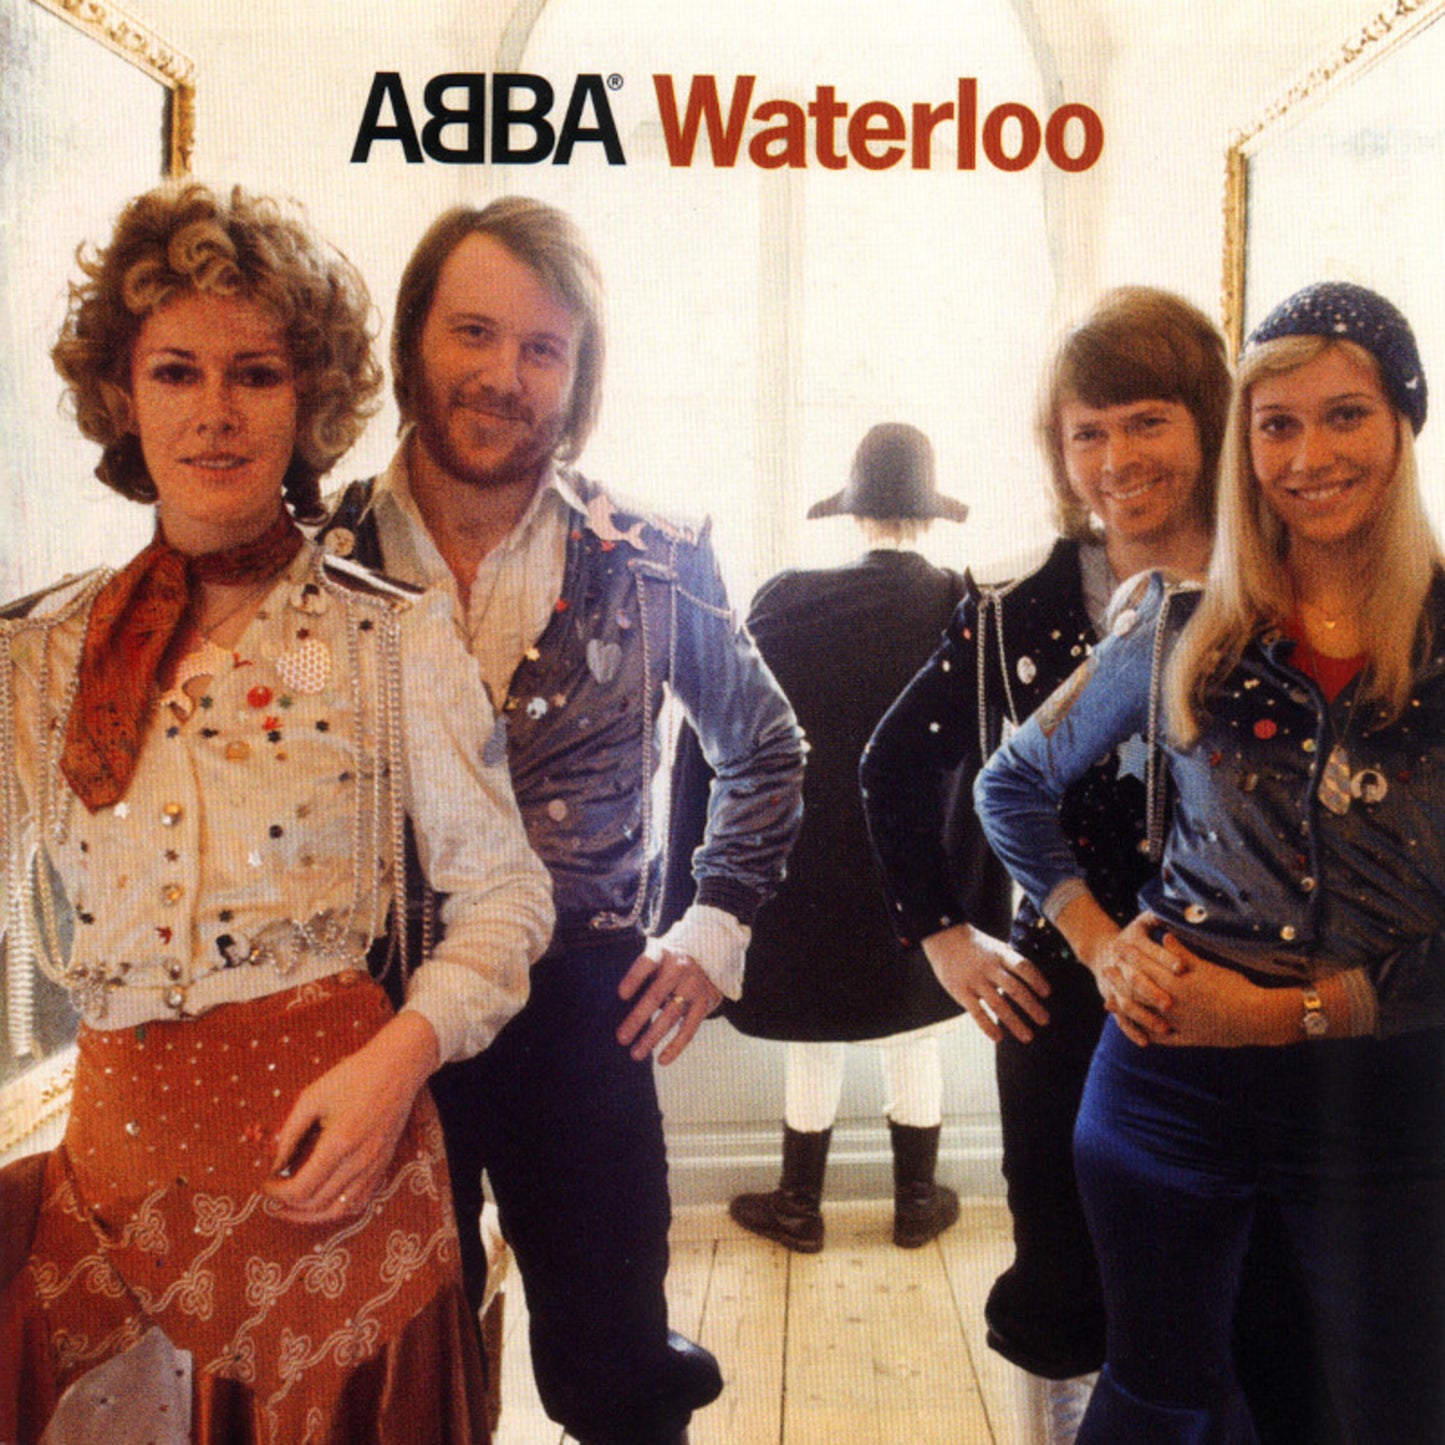 ABBA - Waterloo (50th Anniversary, OBI, certificate of authenticity)